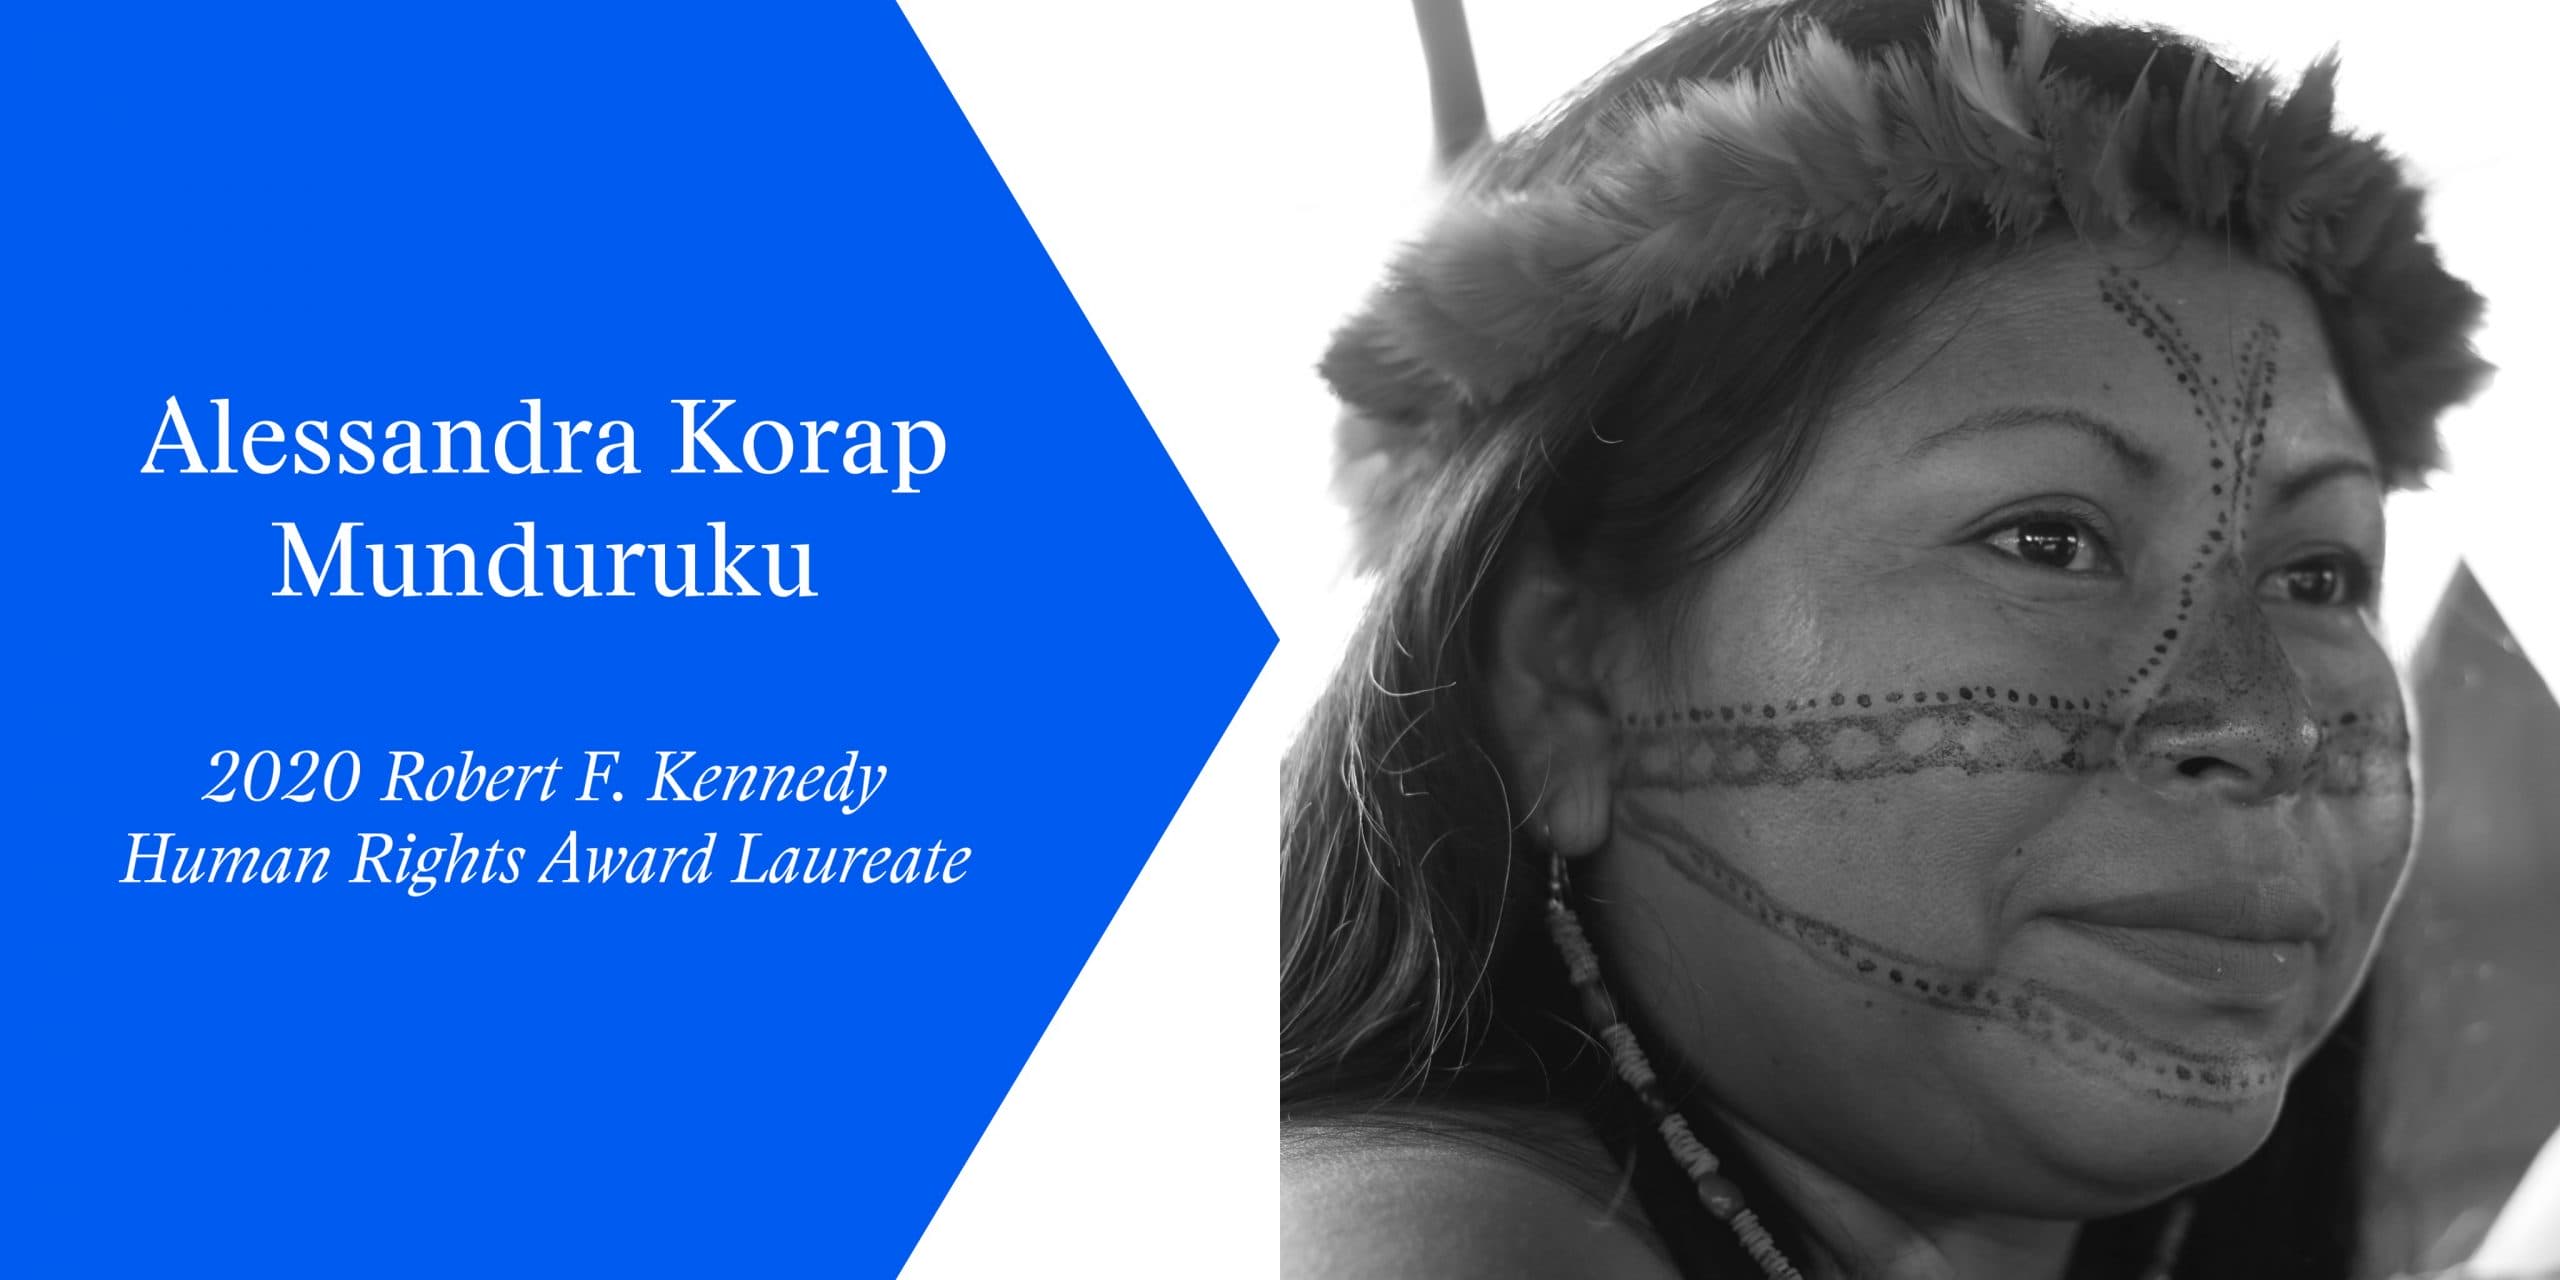 Líder indígena Alessandra Munduruku ganha prêmio de direitos humanos